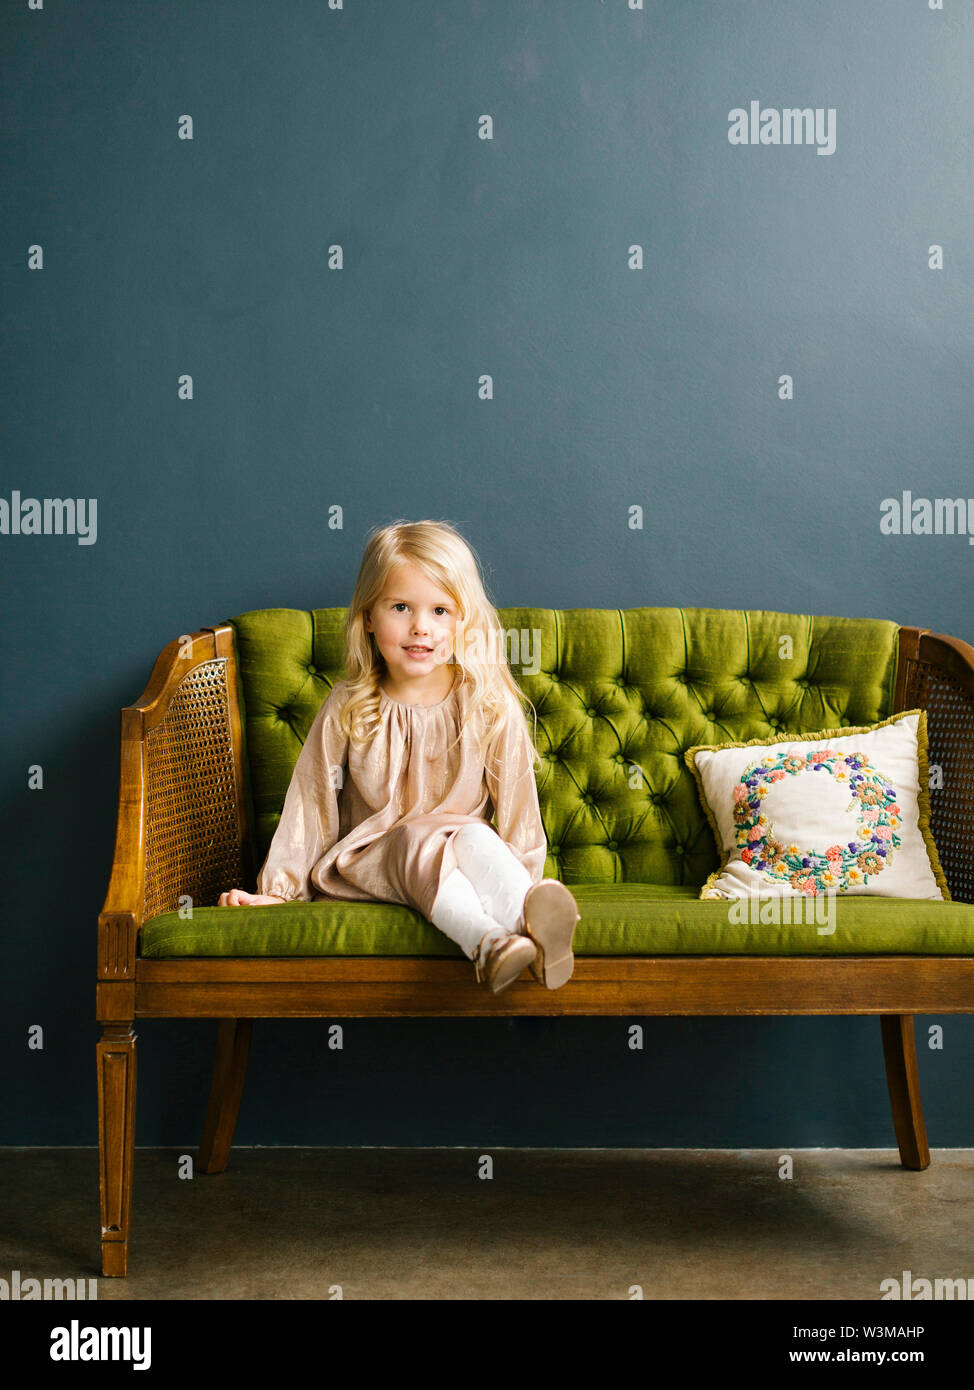 Girl sitting on green sofa Stock Photo